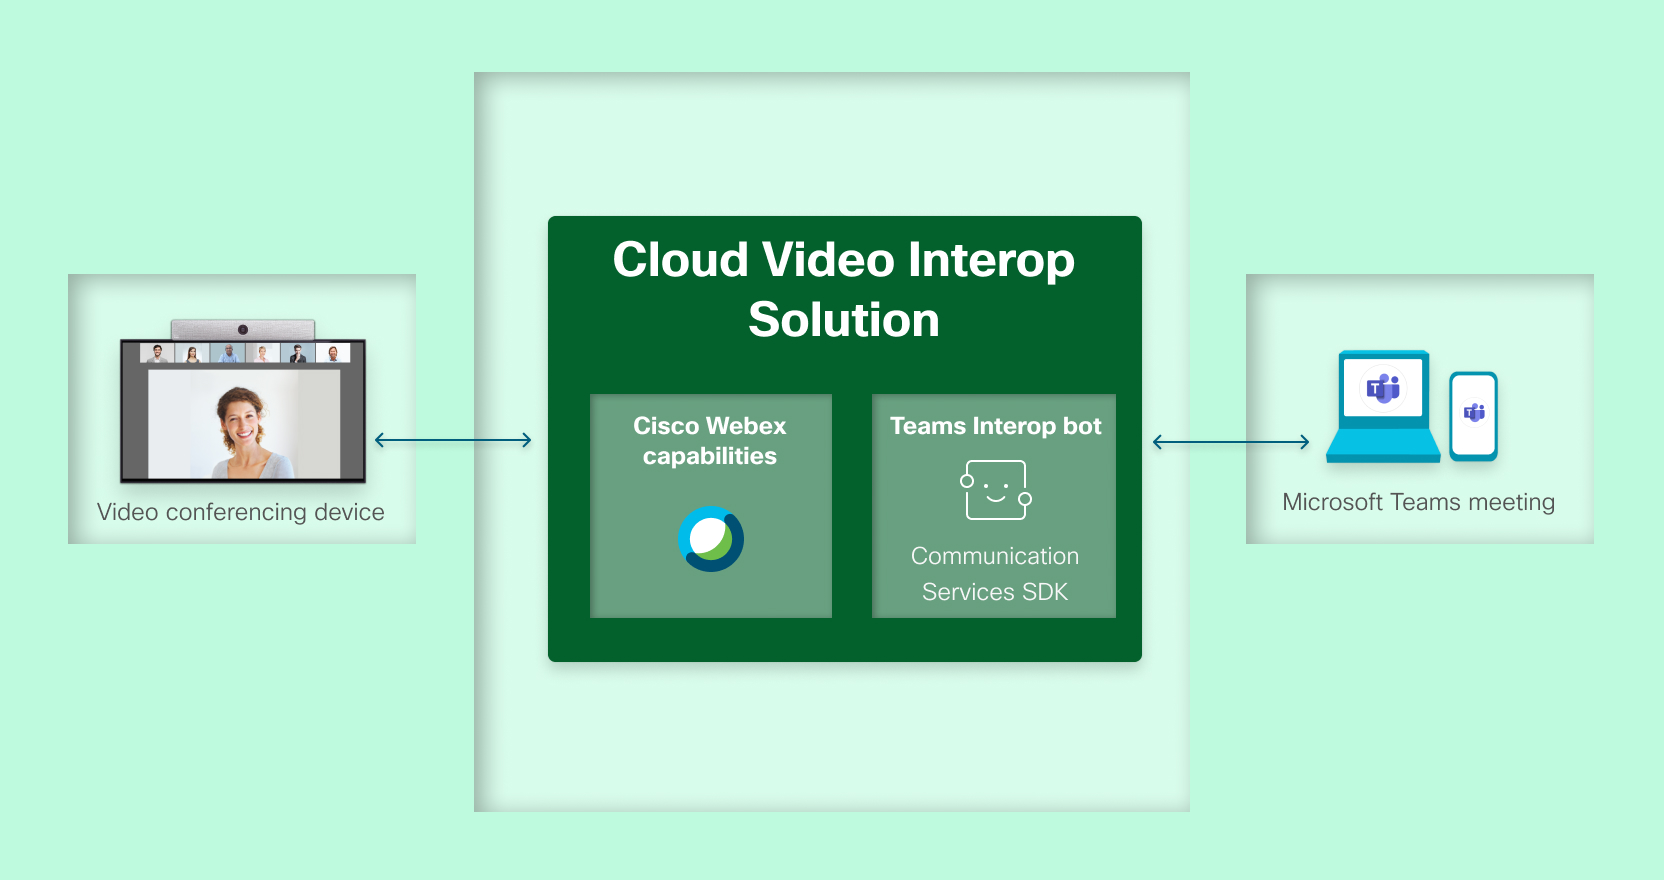 CVI-arkitekturbillede baseret på https://docs.microsoft.com/en-us/microsoftteams/cloud-video-interop